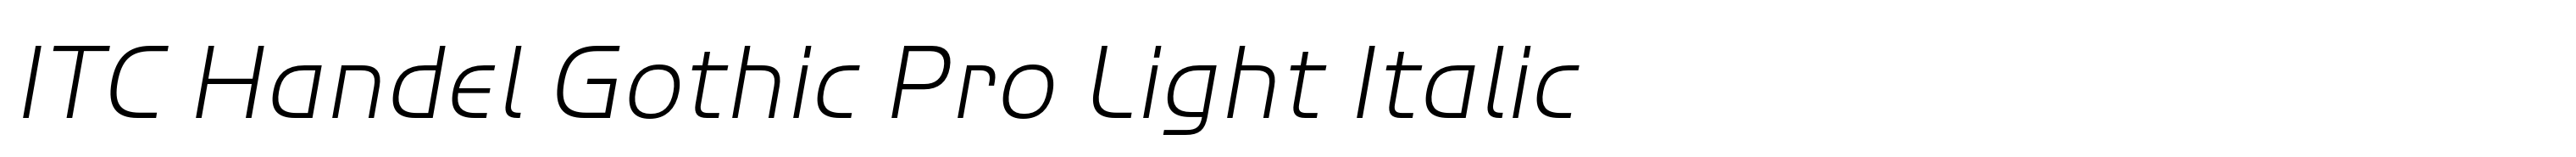 ITC Handel Gothic Pro Light Italic